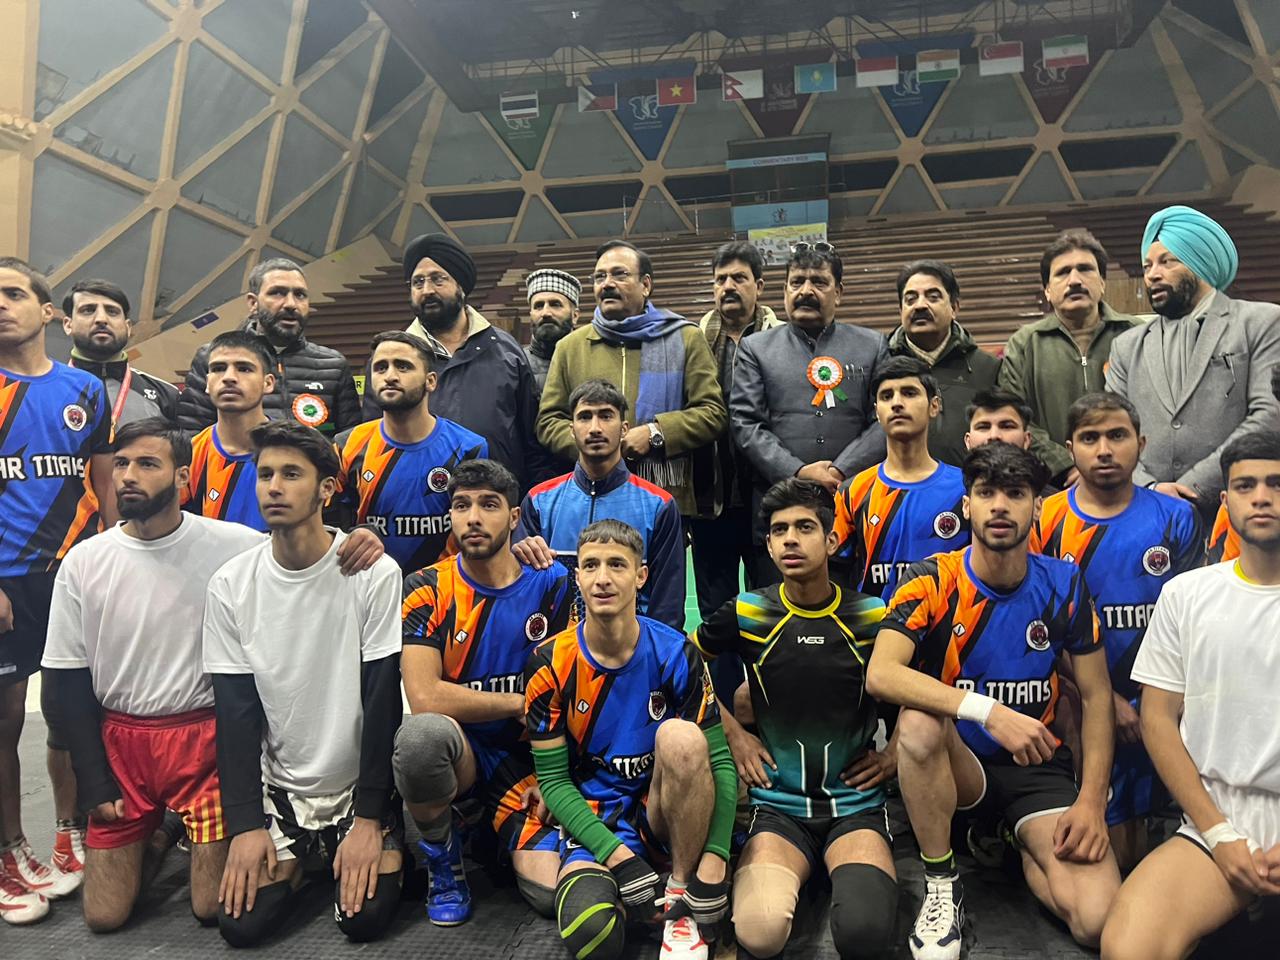 'BJP Kisan Morcha Organizes Spectacular Sports Program - Kabbadi Championship at Indoor Stadium, Srinagar'